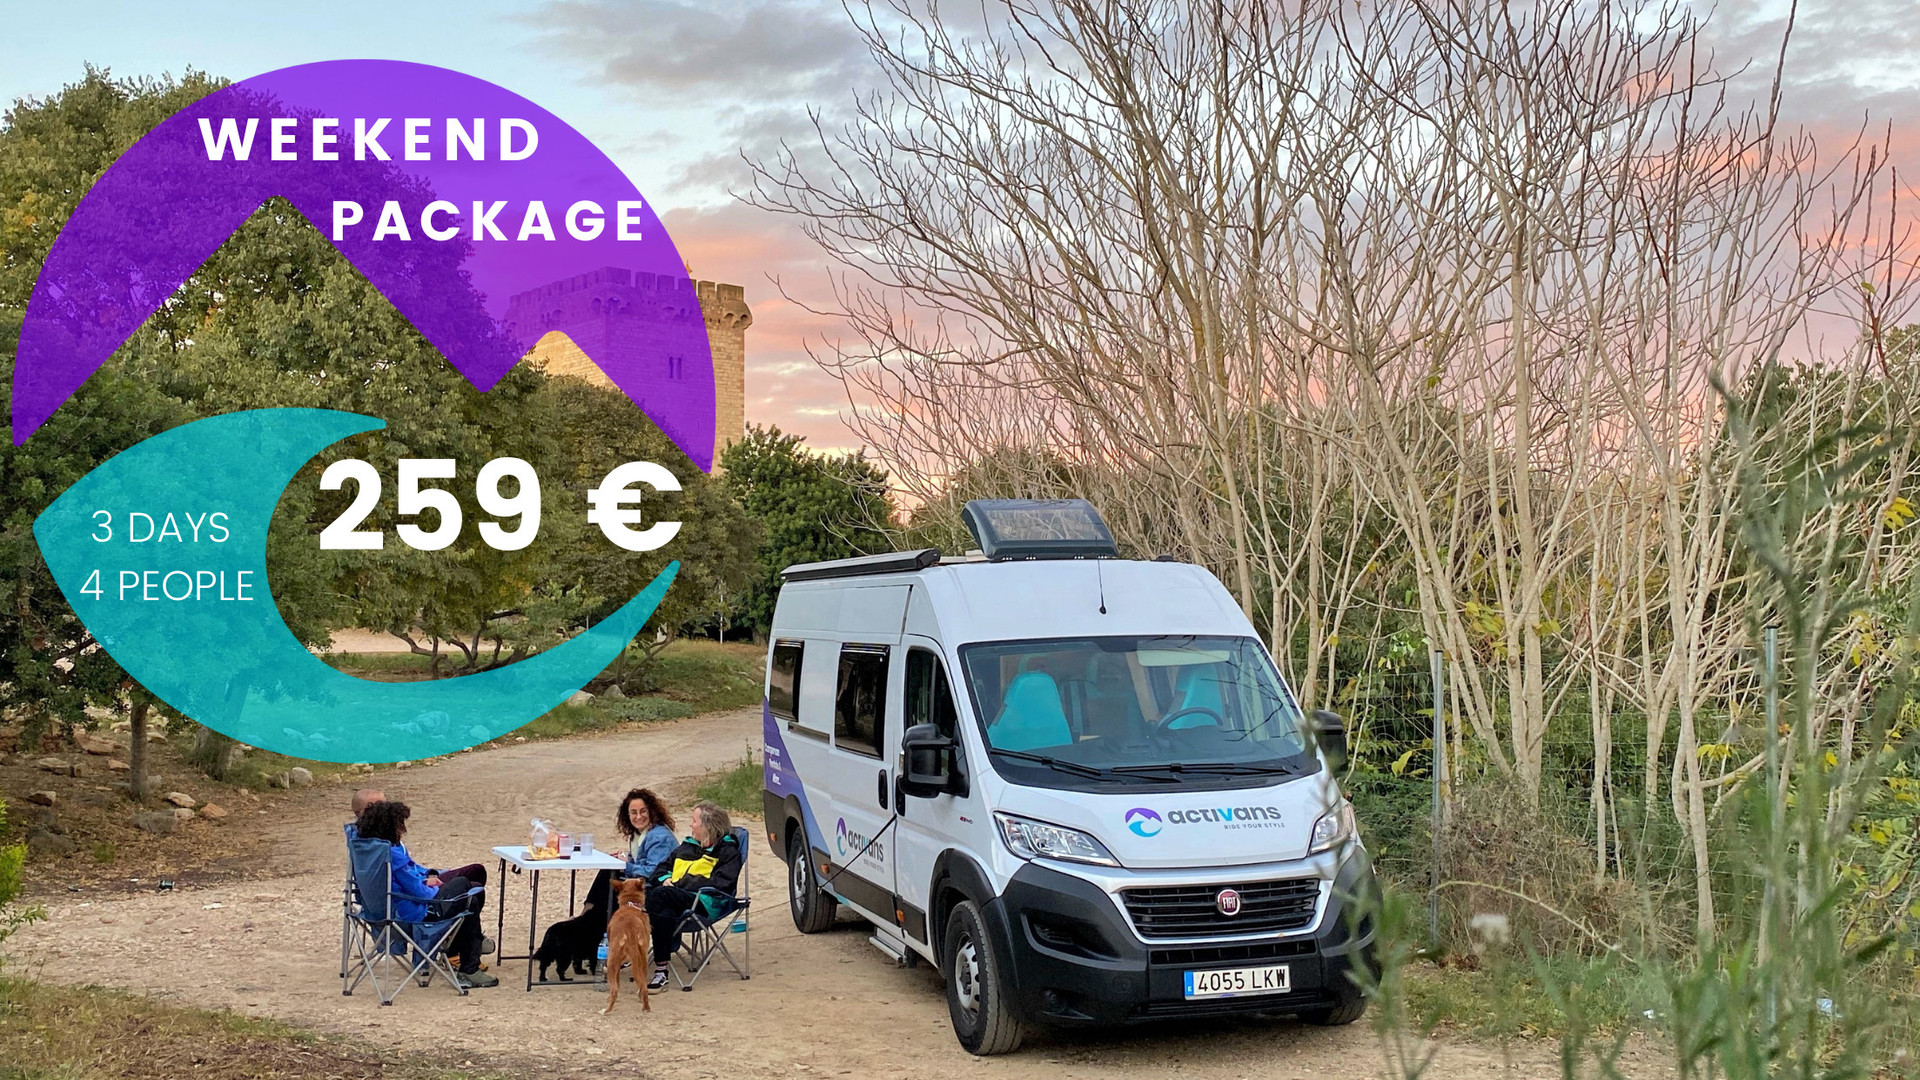 Weekend Campervan Rental offer Spain Costa Brava rent campervan for 3 days